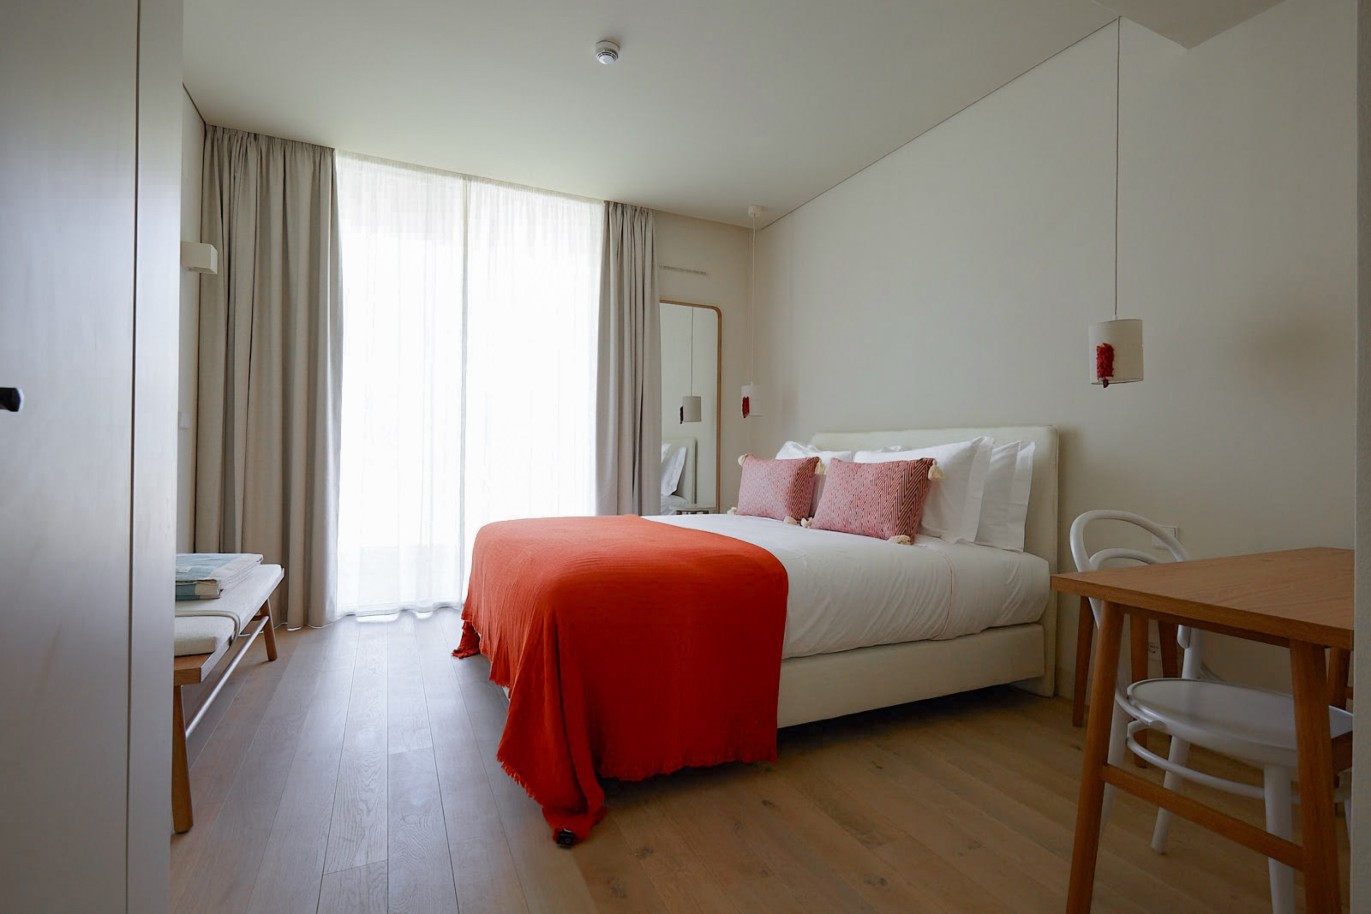 3 bedroom apartment in resort, for sale in Porches, Algarve_230712